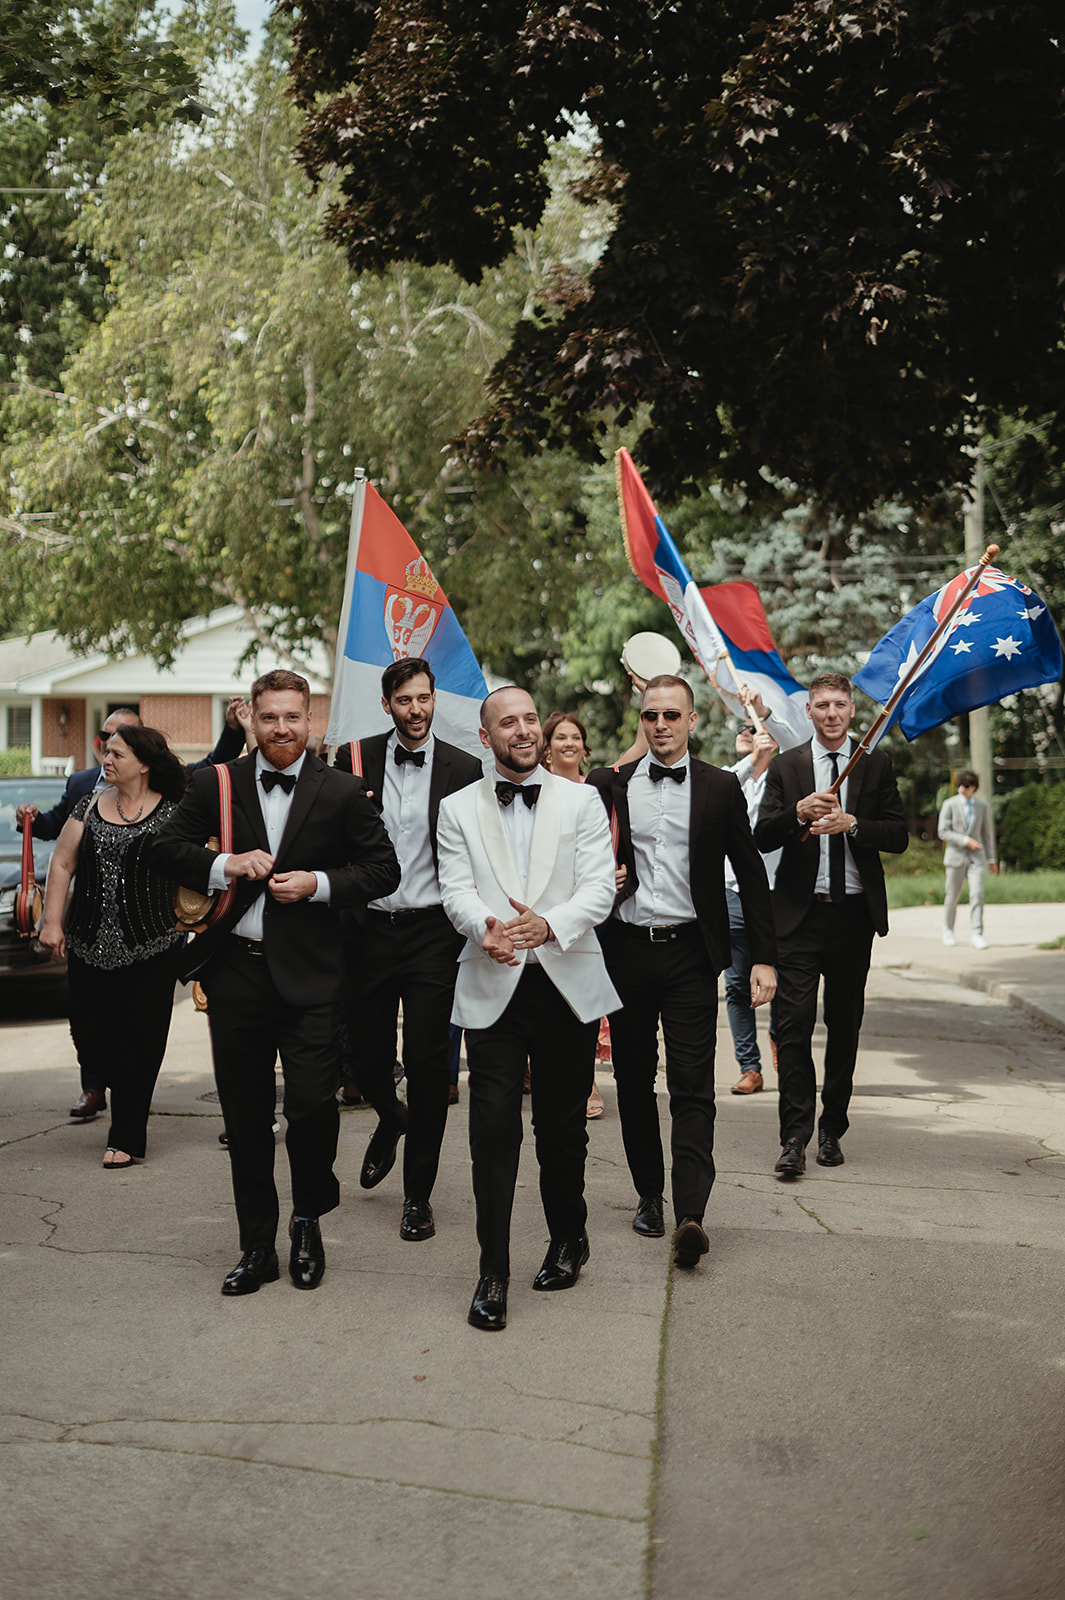 Ontario Serbian Wedding Celebration